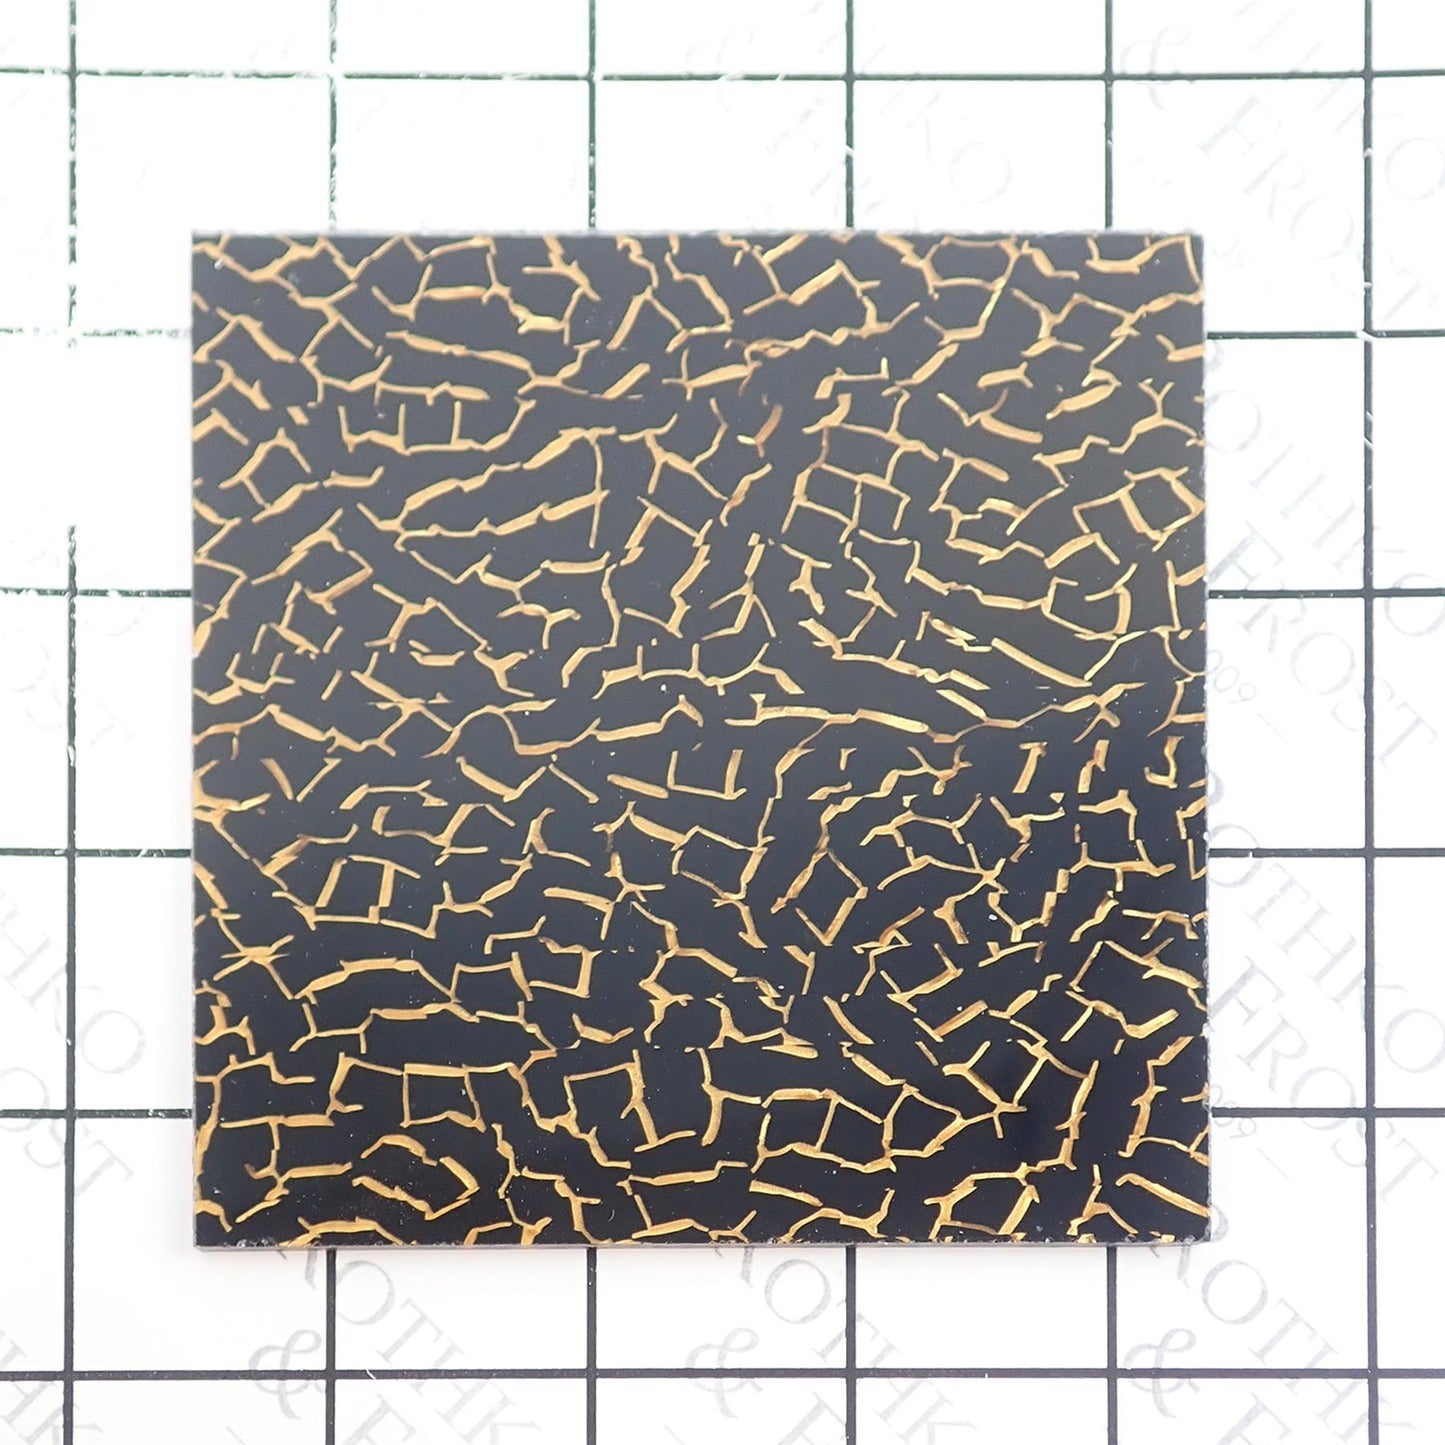 Incudo Black Crackle Celluloid Laminate Acrylic Sheet - 500x300x3mm